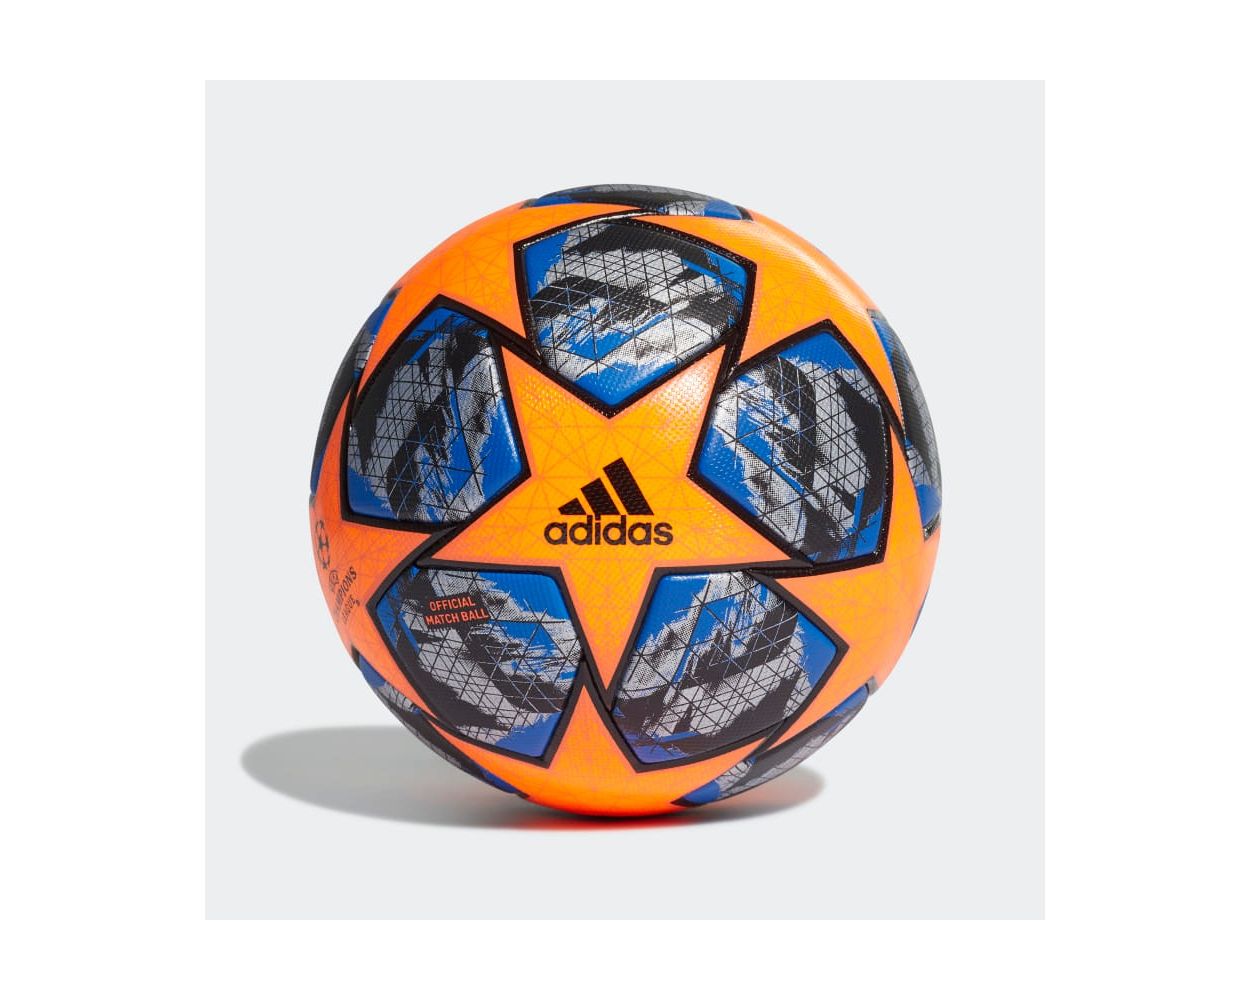 Adidas Brazuca Official Winter Match Ball Review - Soccer Reviews